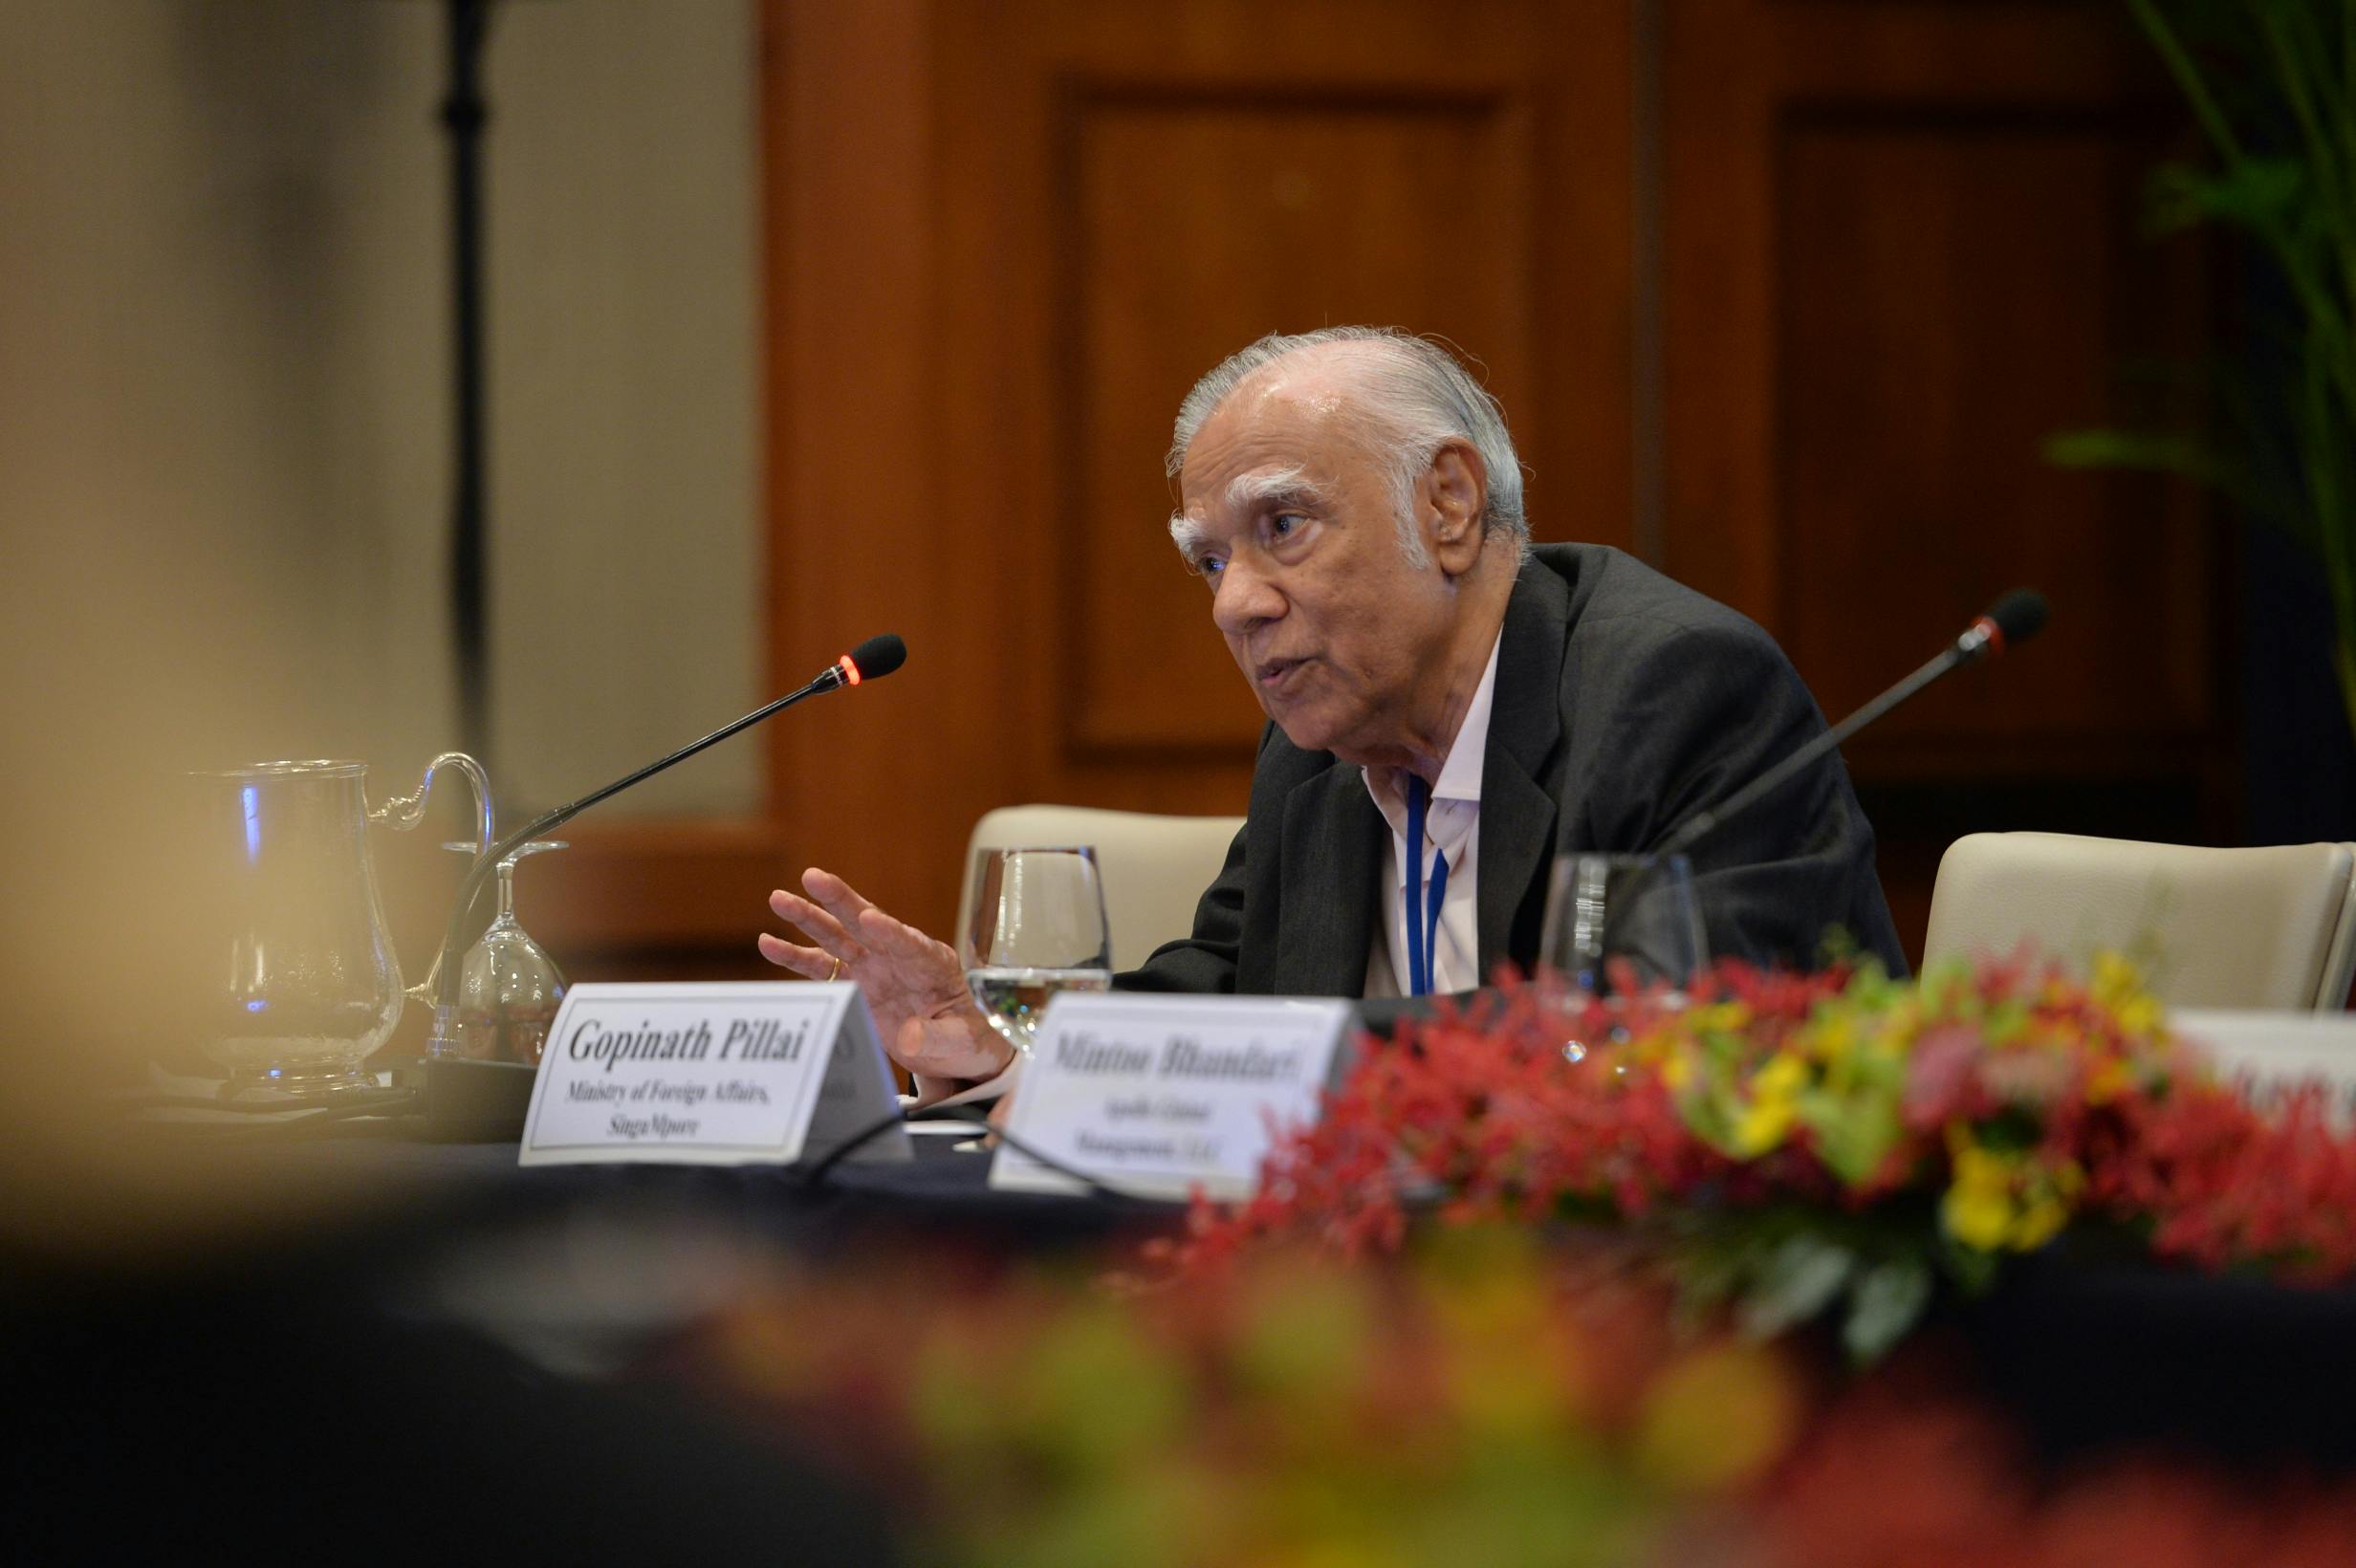 An older man speaking at a panel